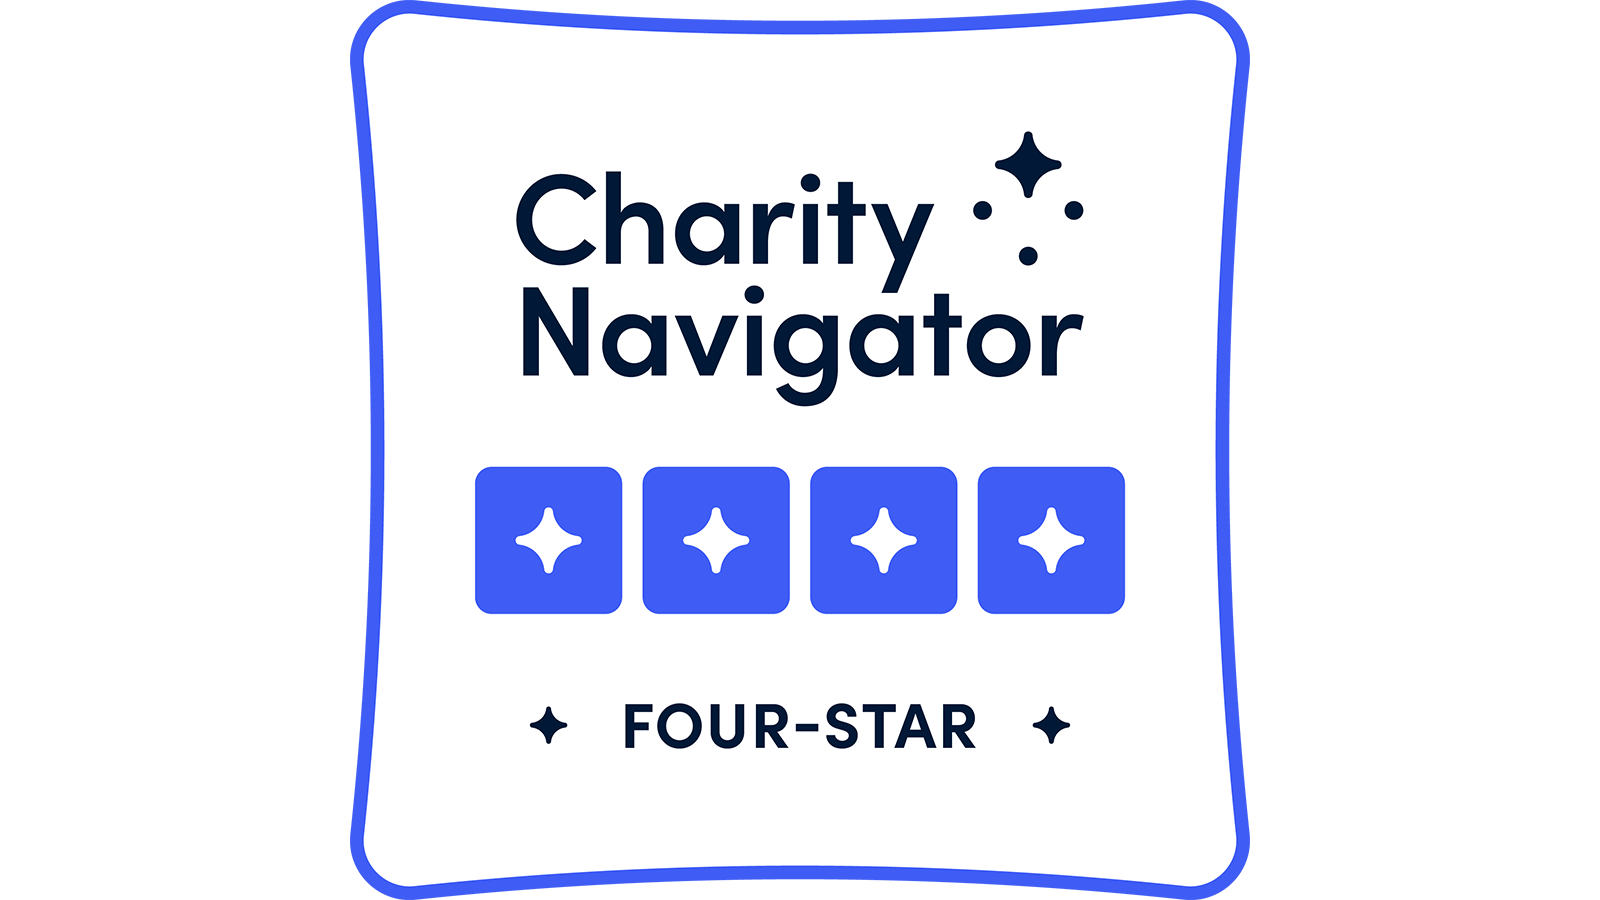 Charity Navigator's four-star badge